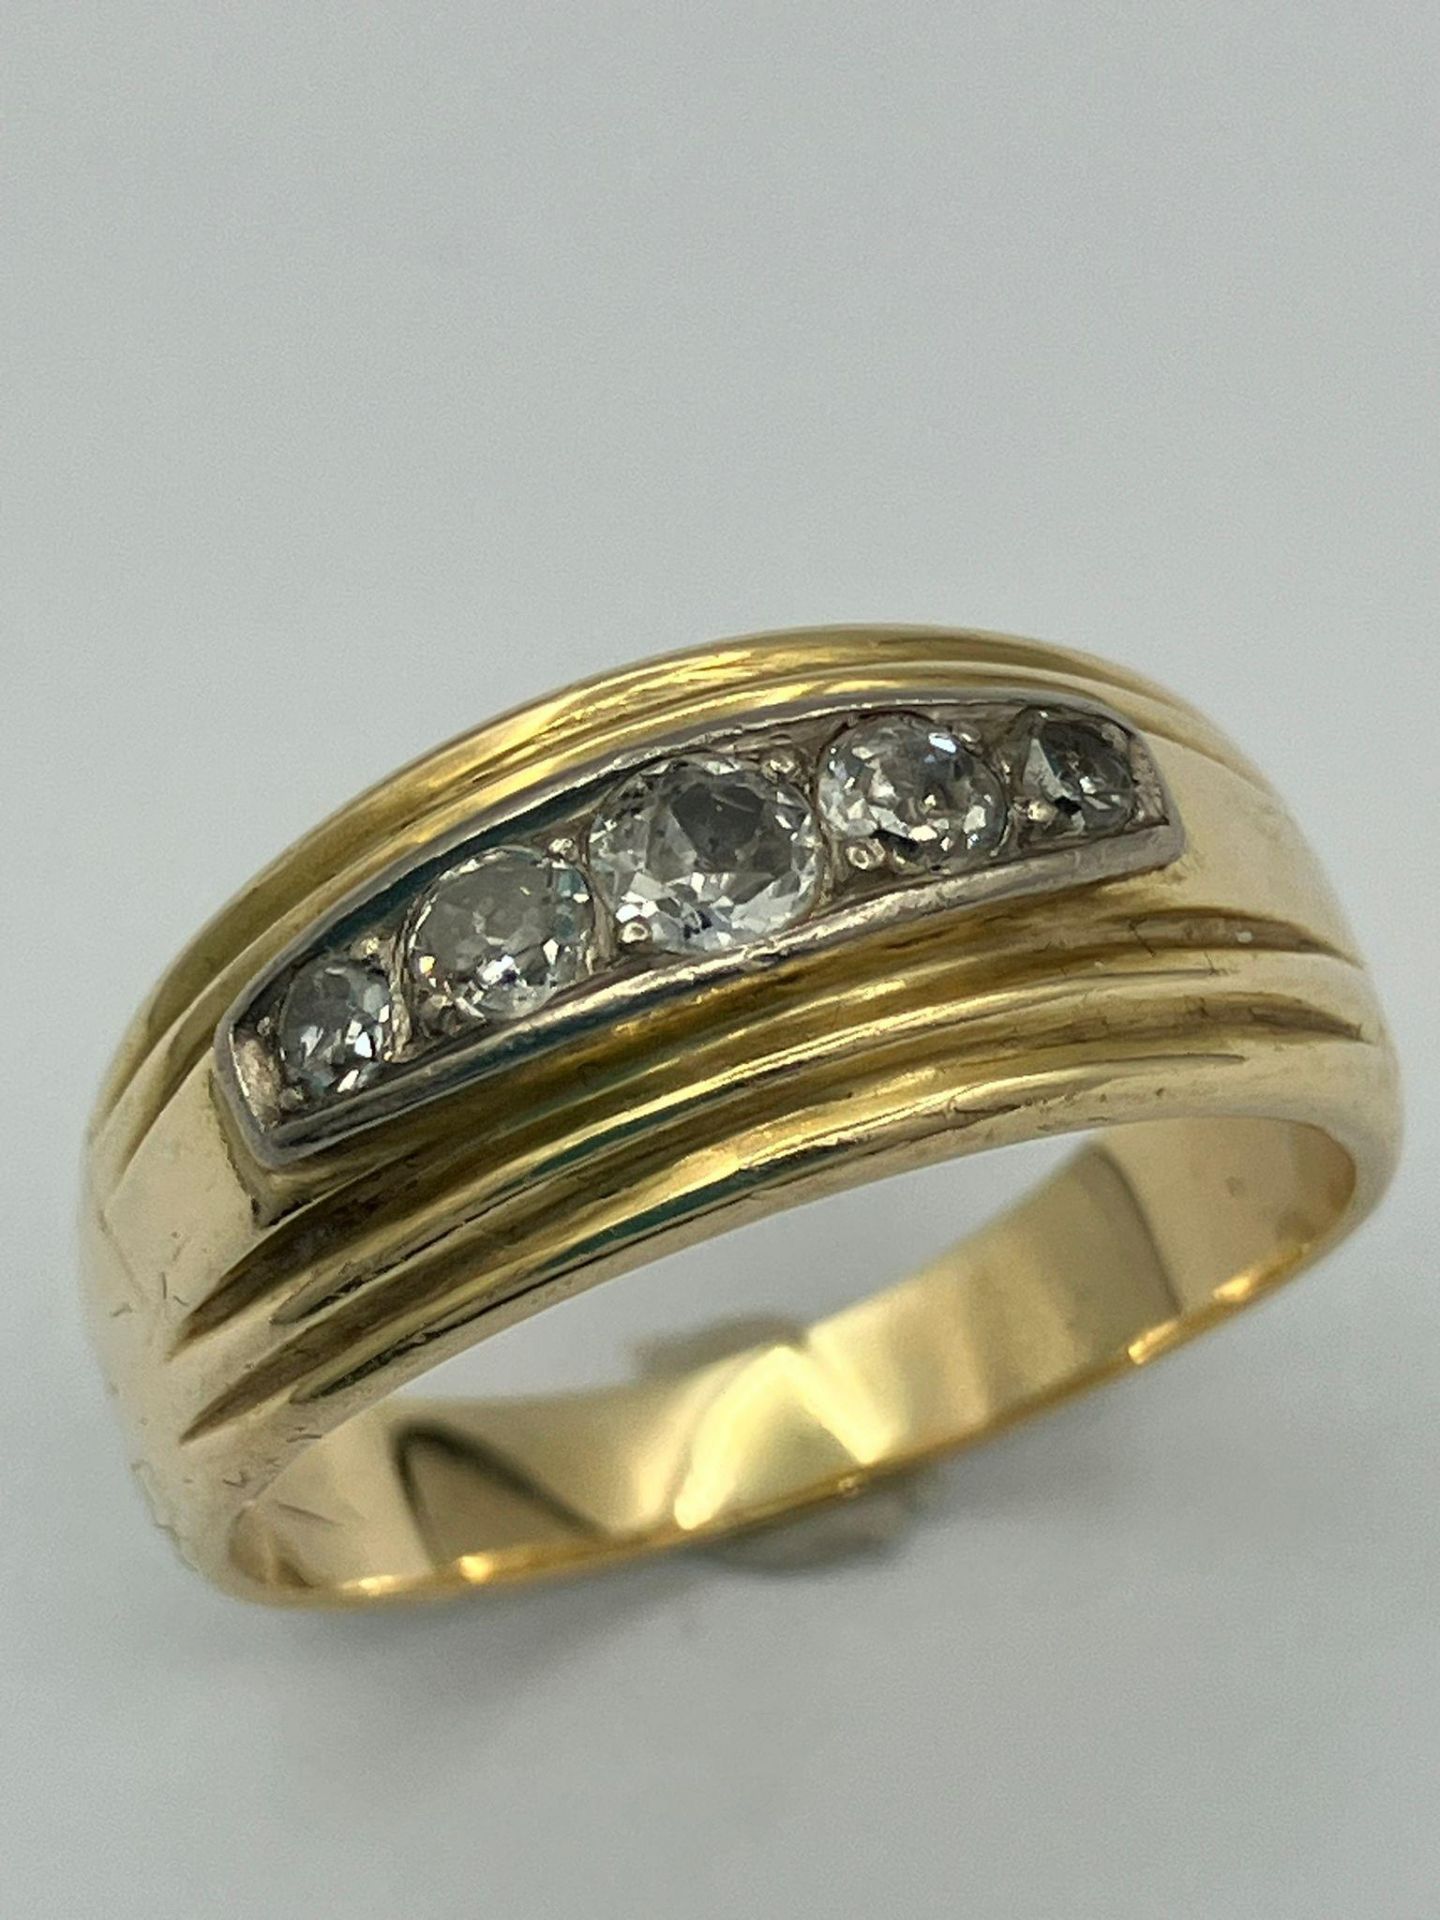 Beautiful 14 carat GOLD RING. Having 5 x GRADUATED DIAMONDS Mounted to top. 6.9 grams. Size P 1/